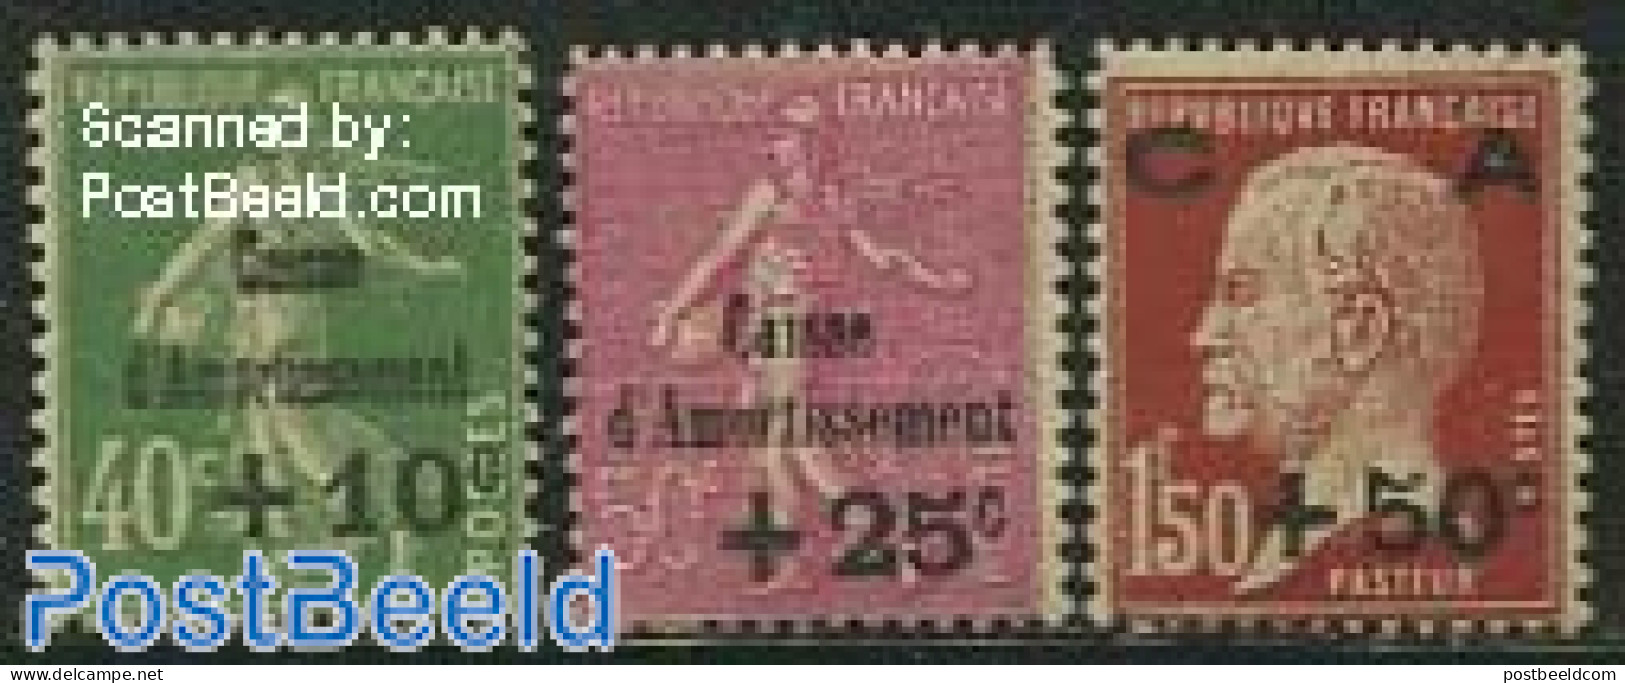 France 1929 C.A. Overprints 3v, Unused (hinged) - Neufs